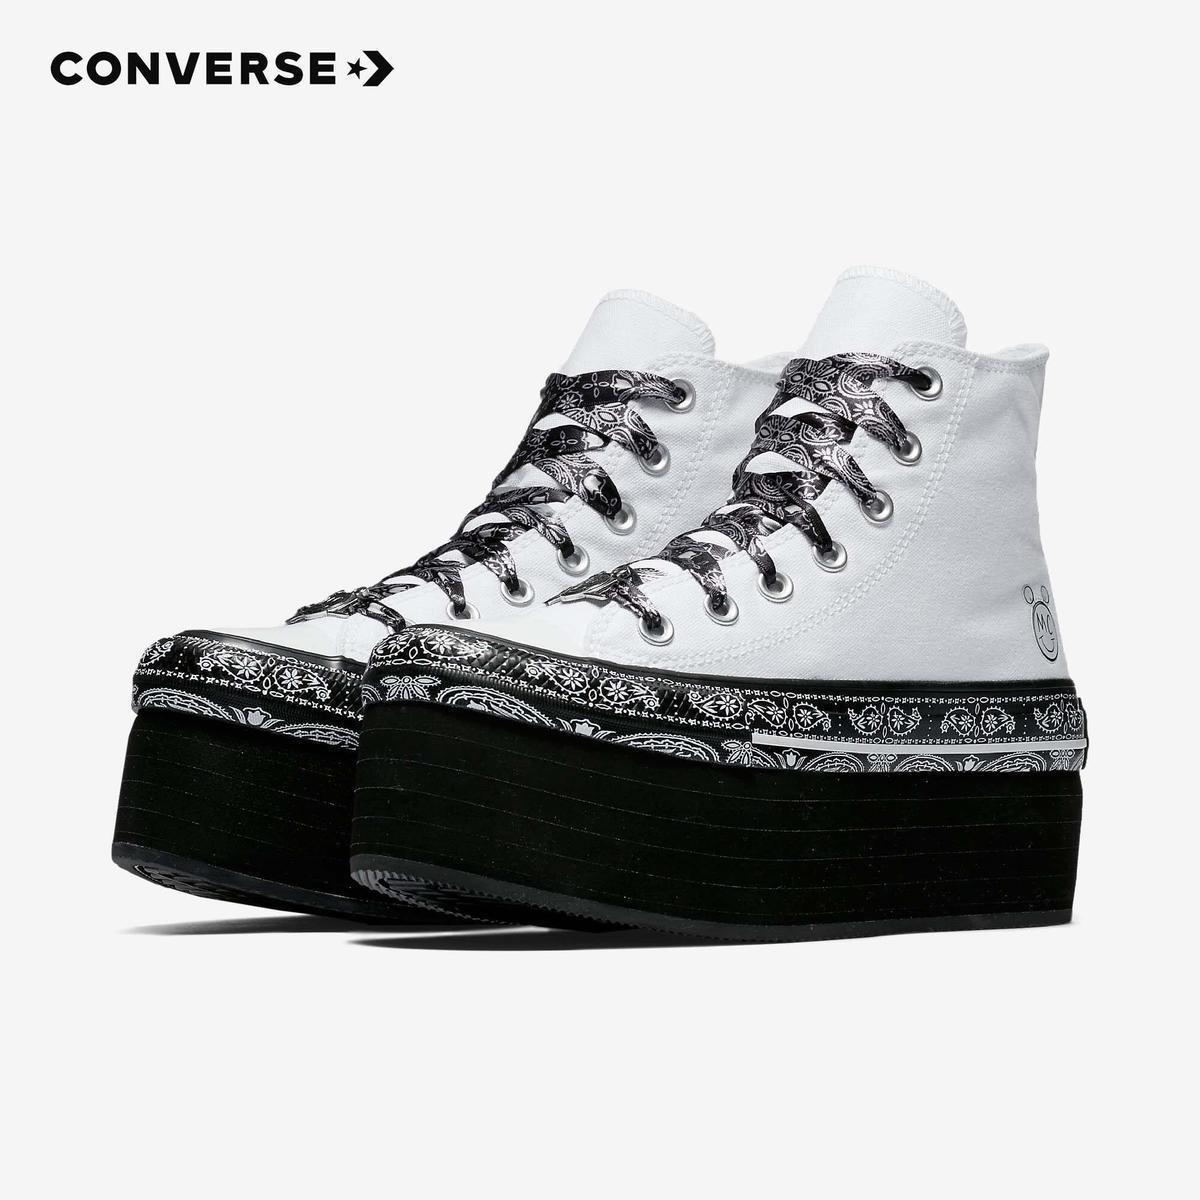 converse x miley cyrus chuck taylor high platform white hi shoes for women 562240c